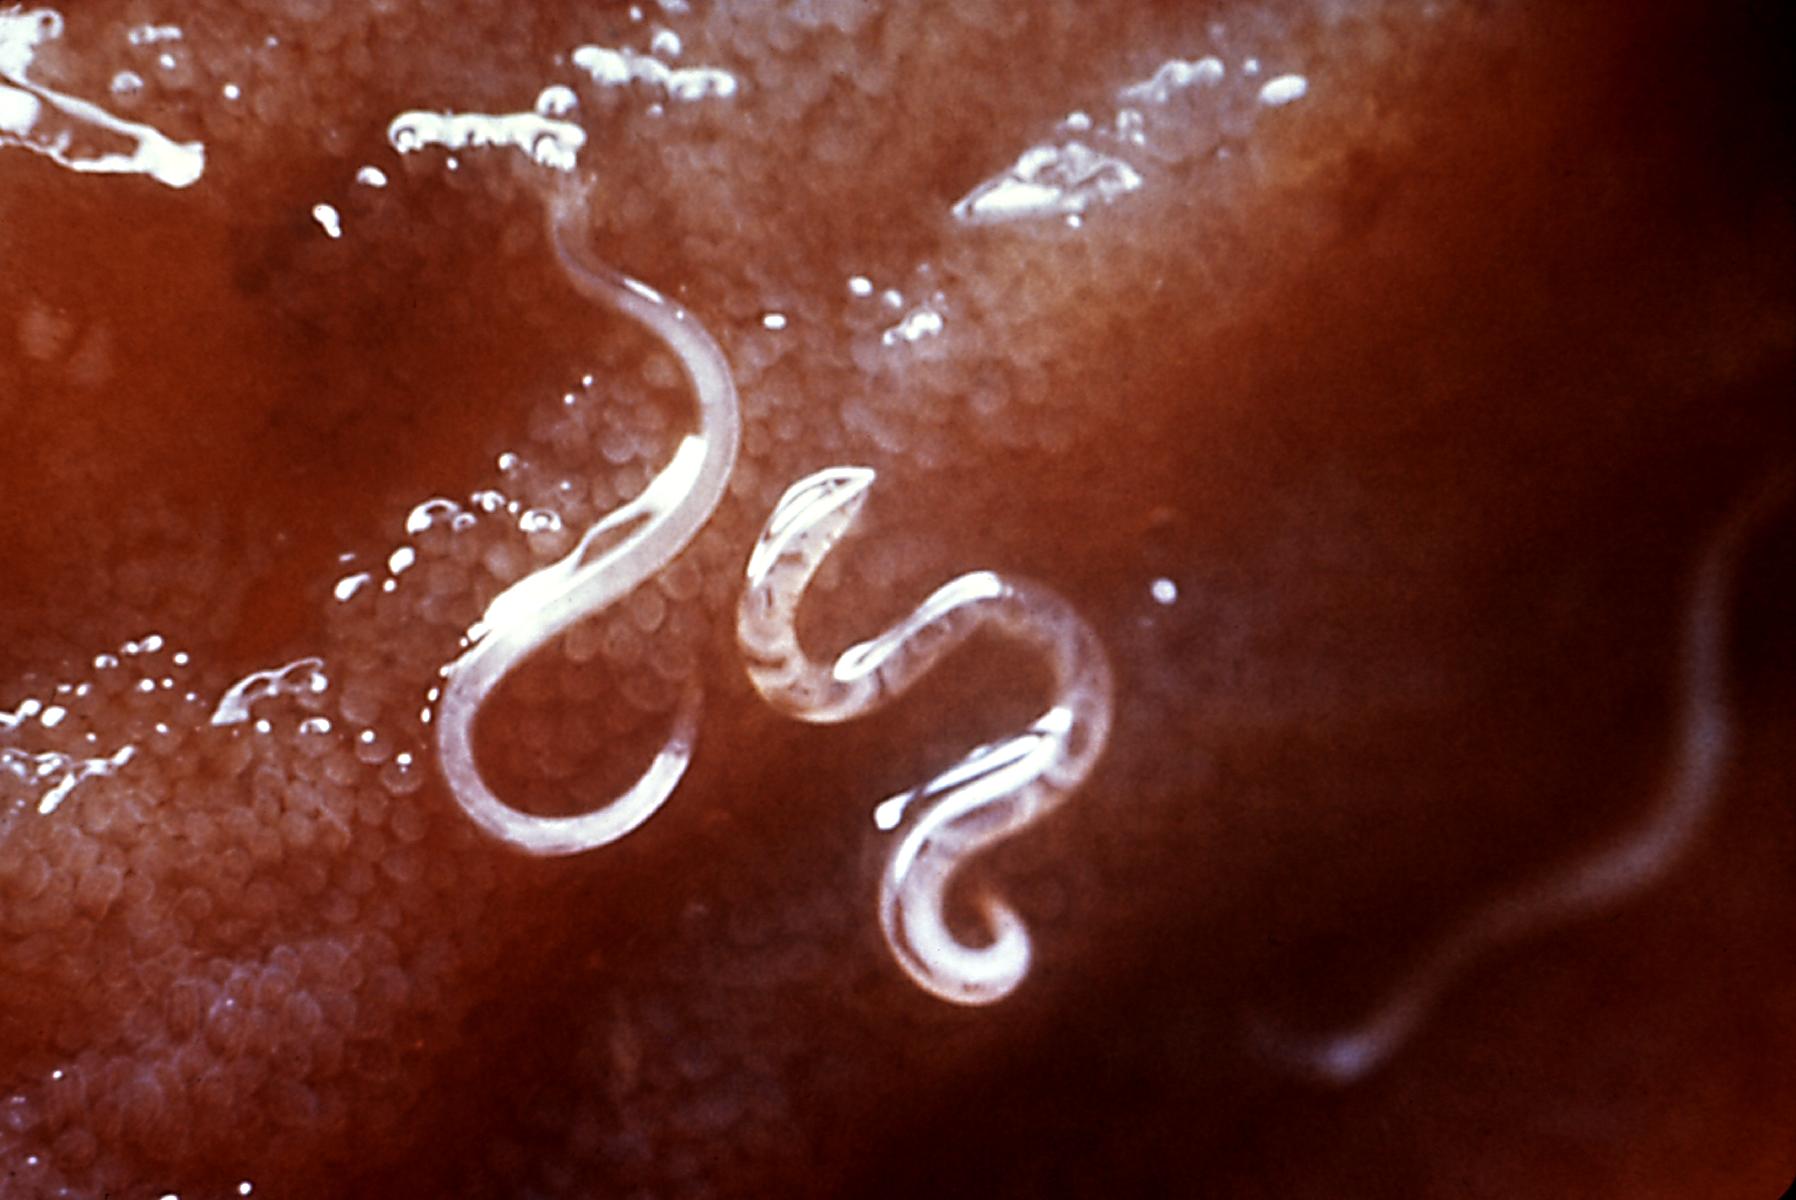 Science News Roundup: Study reveals secrets of parasitic worms; Bill Gates lauds futuristic toilets